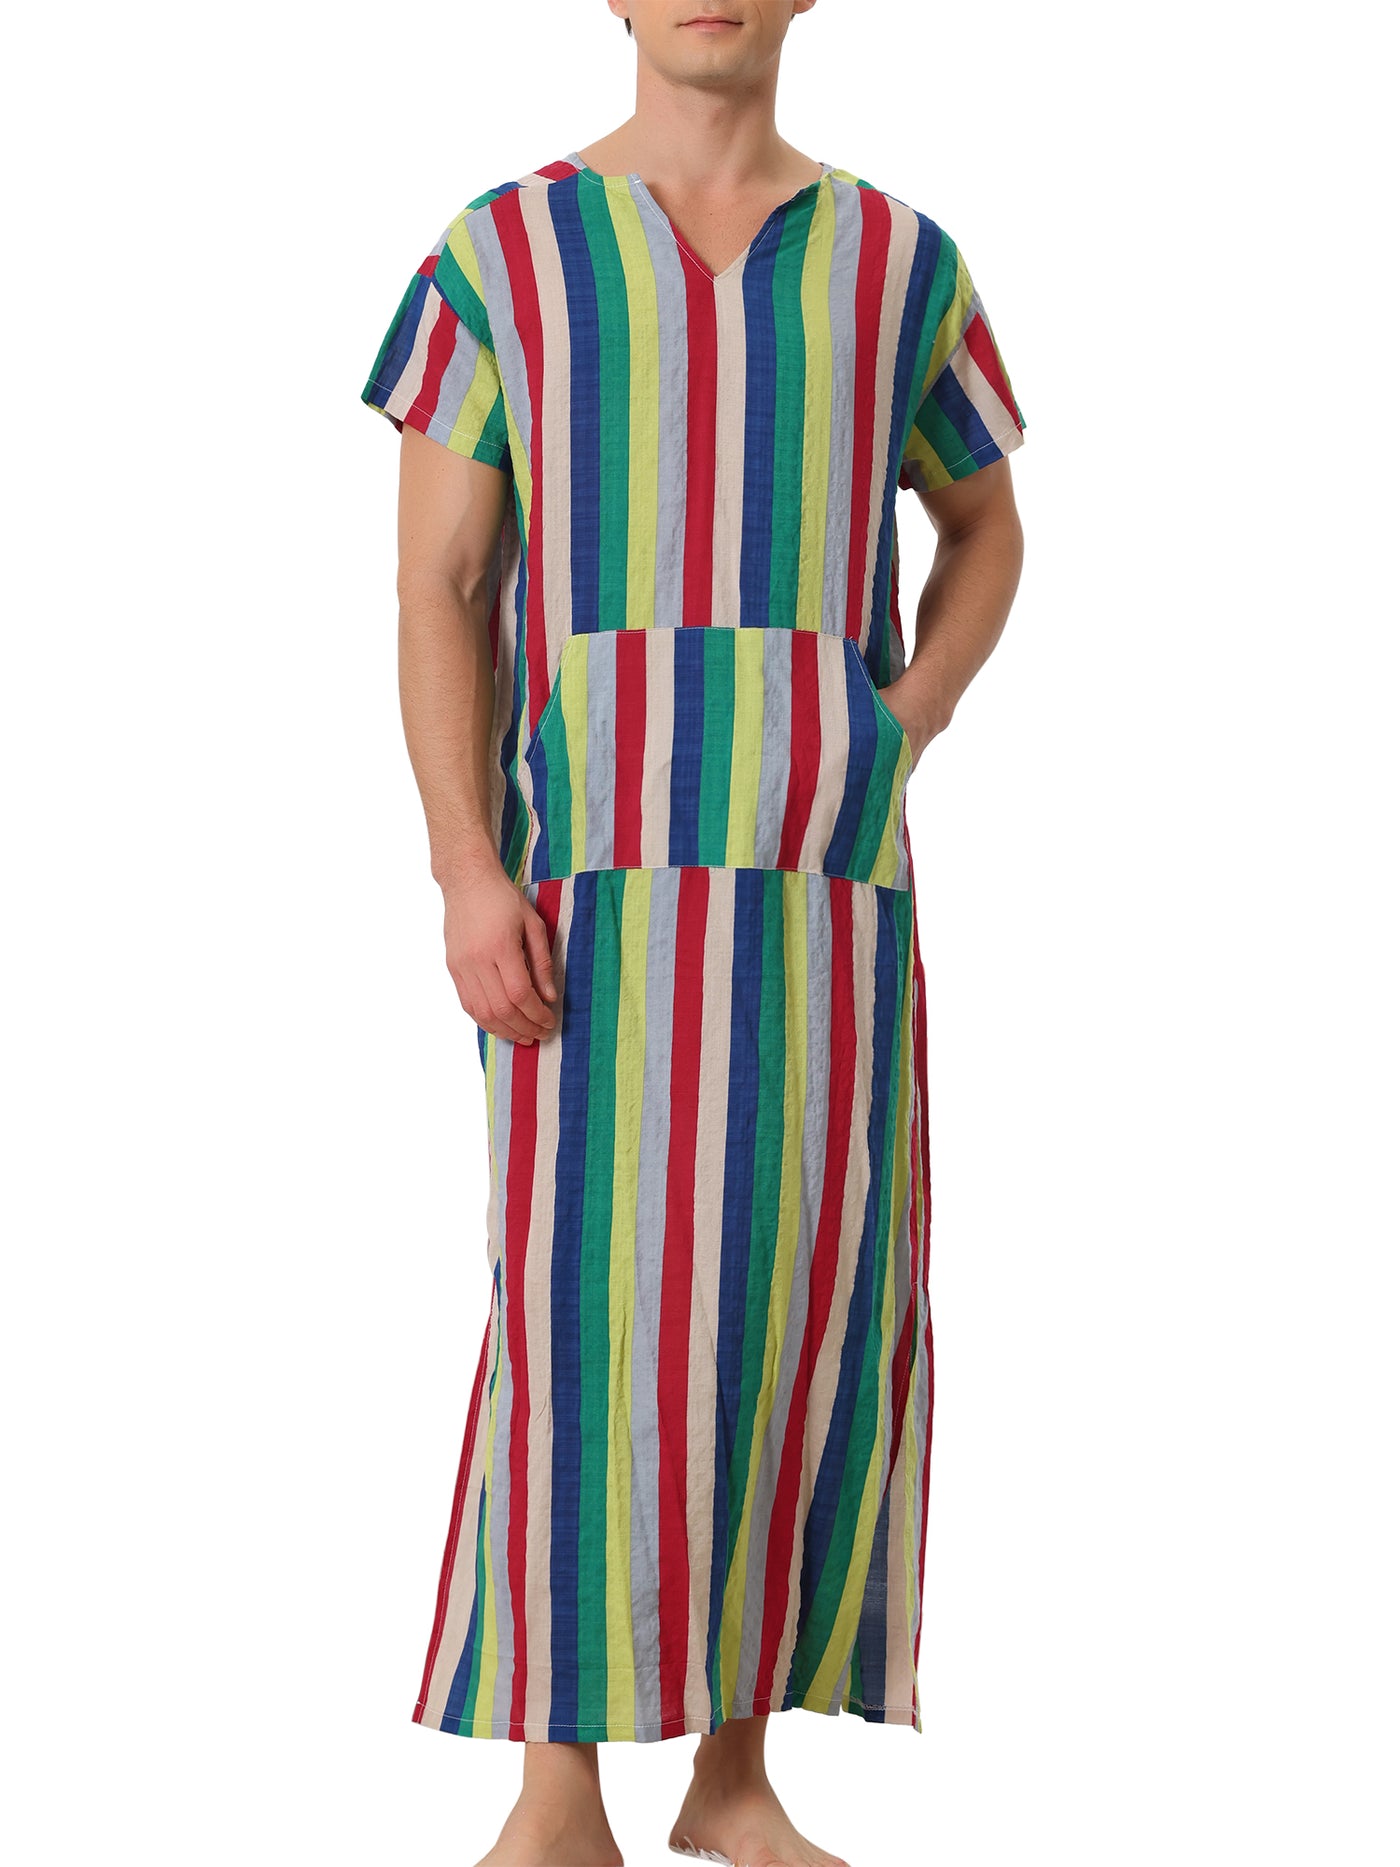 Bublédon Striped Sleep Shirts for Men's V Neck Short Sleeves Color Block Nightshirt